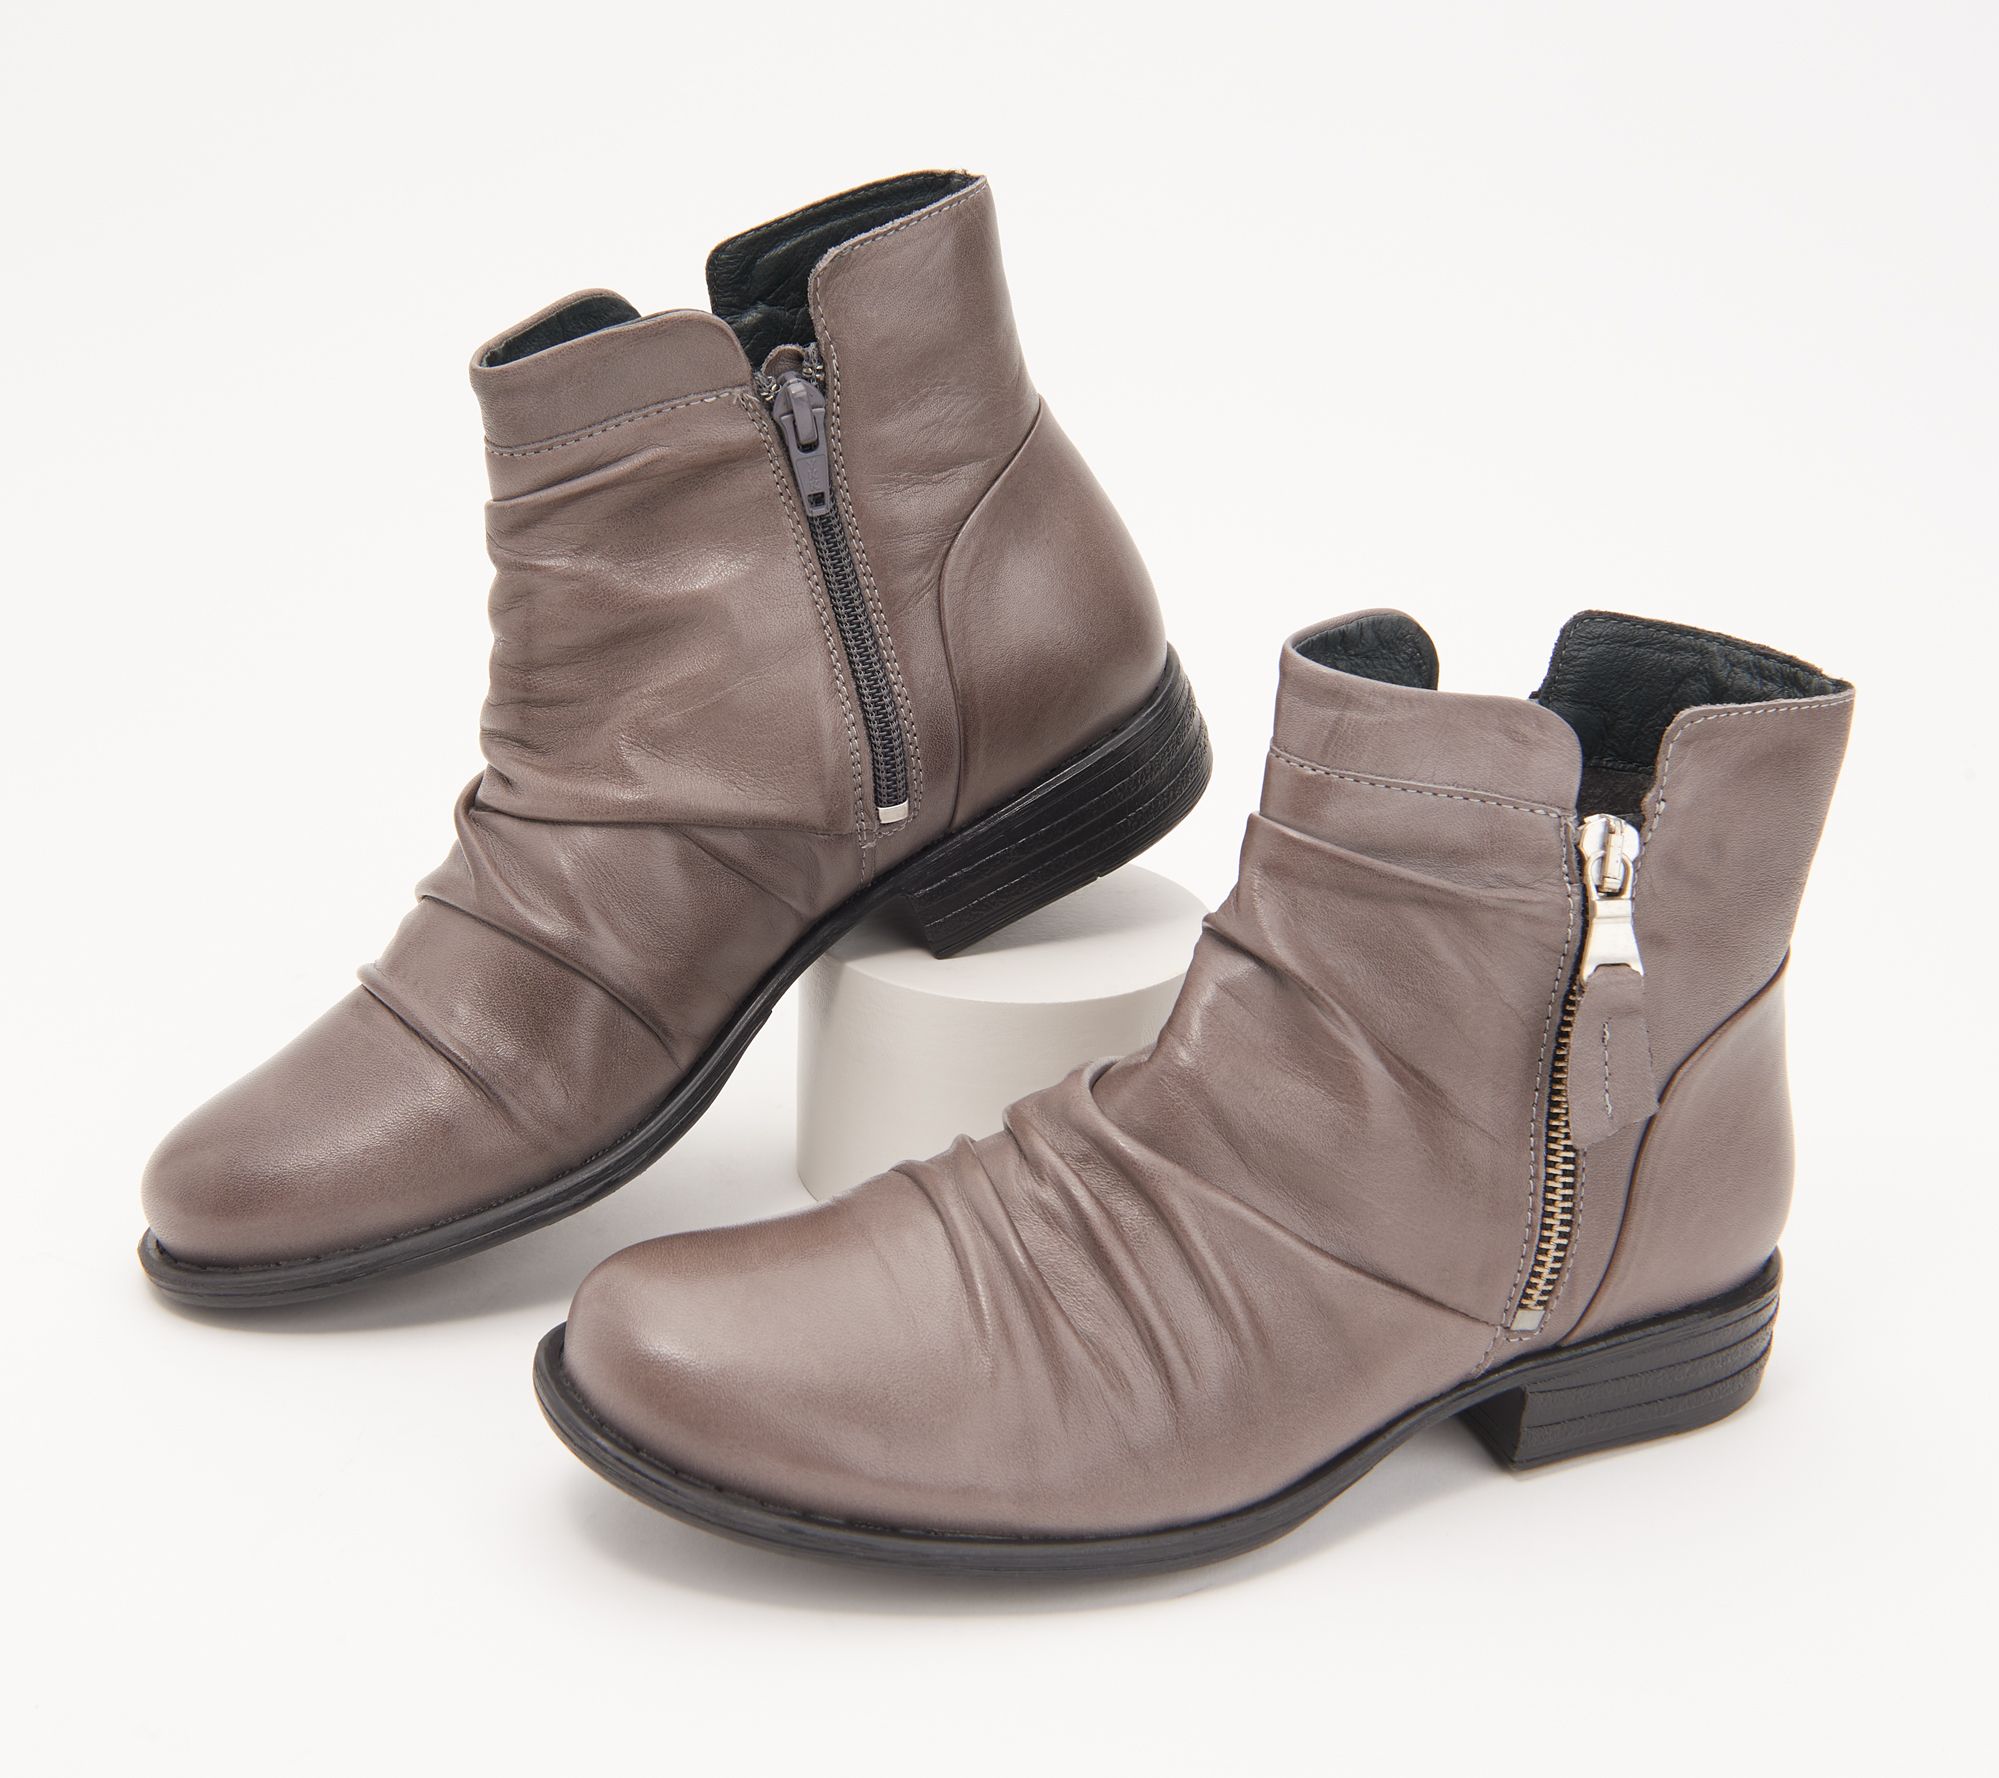 Miz Mooz New York City Lucy Boots Super Soft Leather! Brand New In Box !